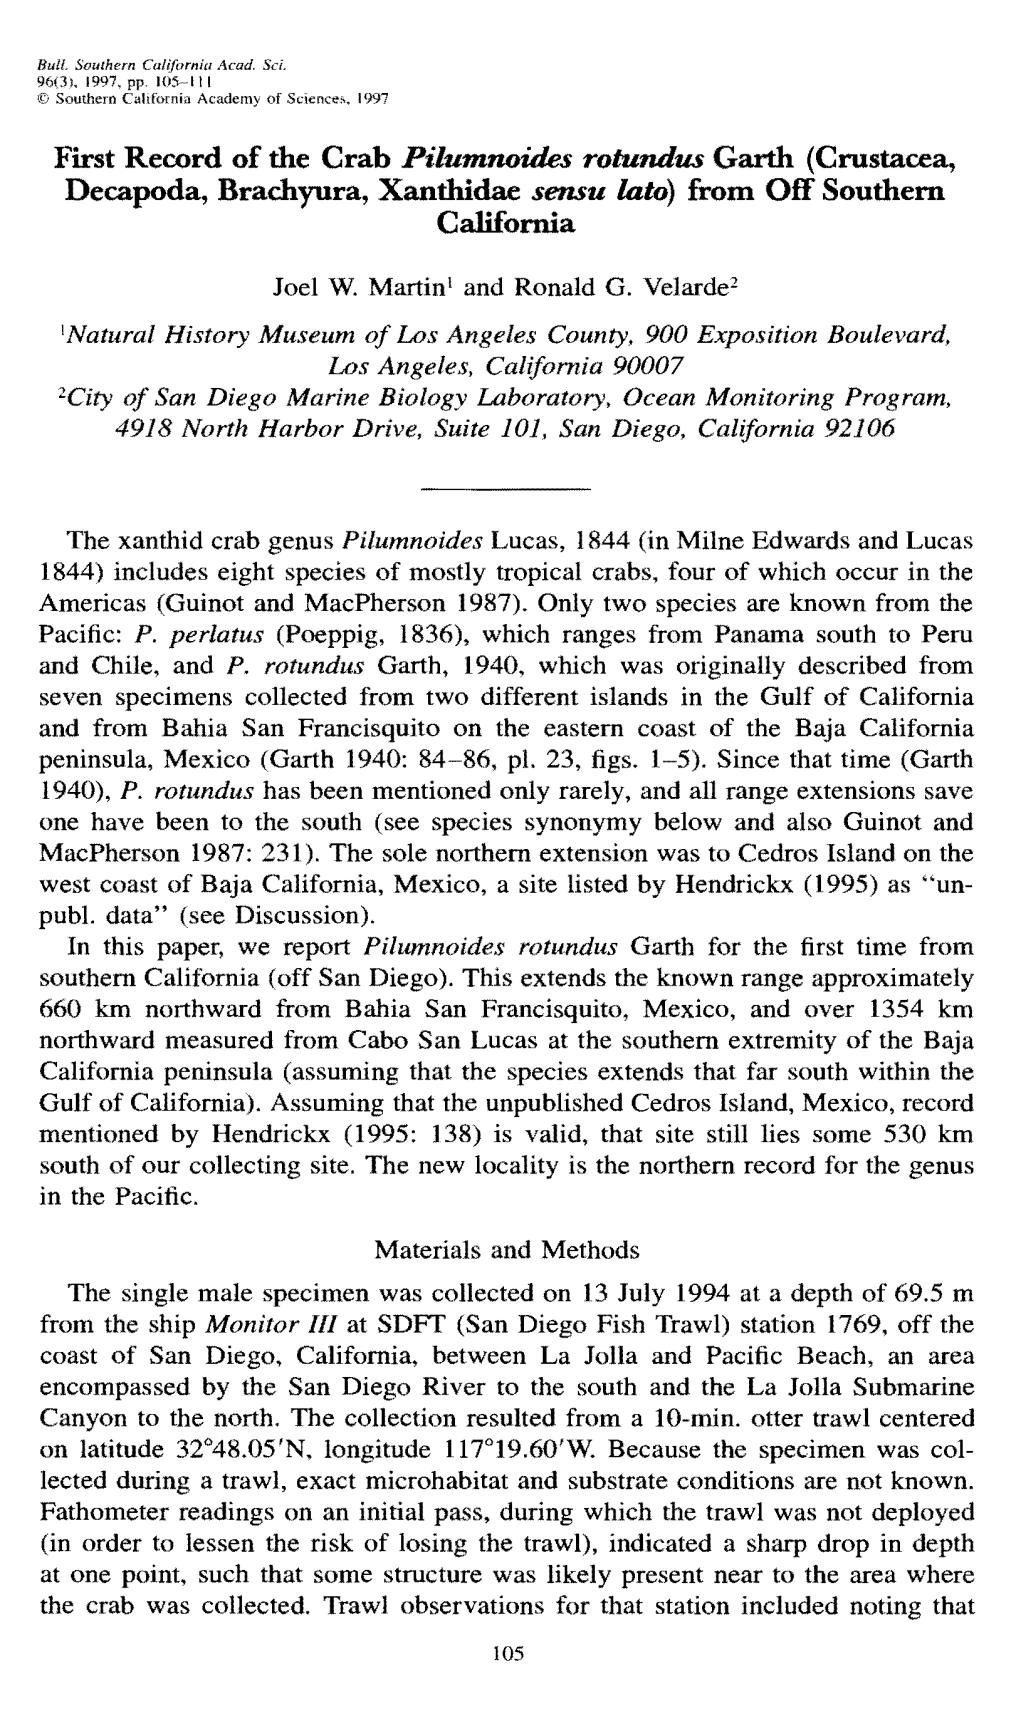 First Record of the Crab Pilumnoides Rotundus Garth (Crustacea, Decapoda, Brachyura, Xanthidae Sensu Lata) from Off Southern California